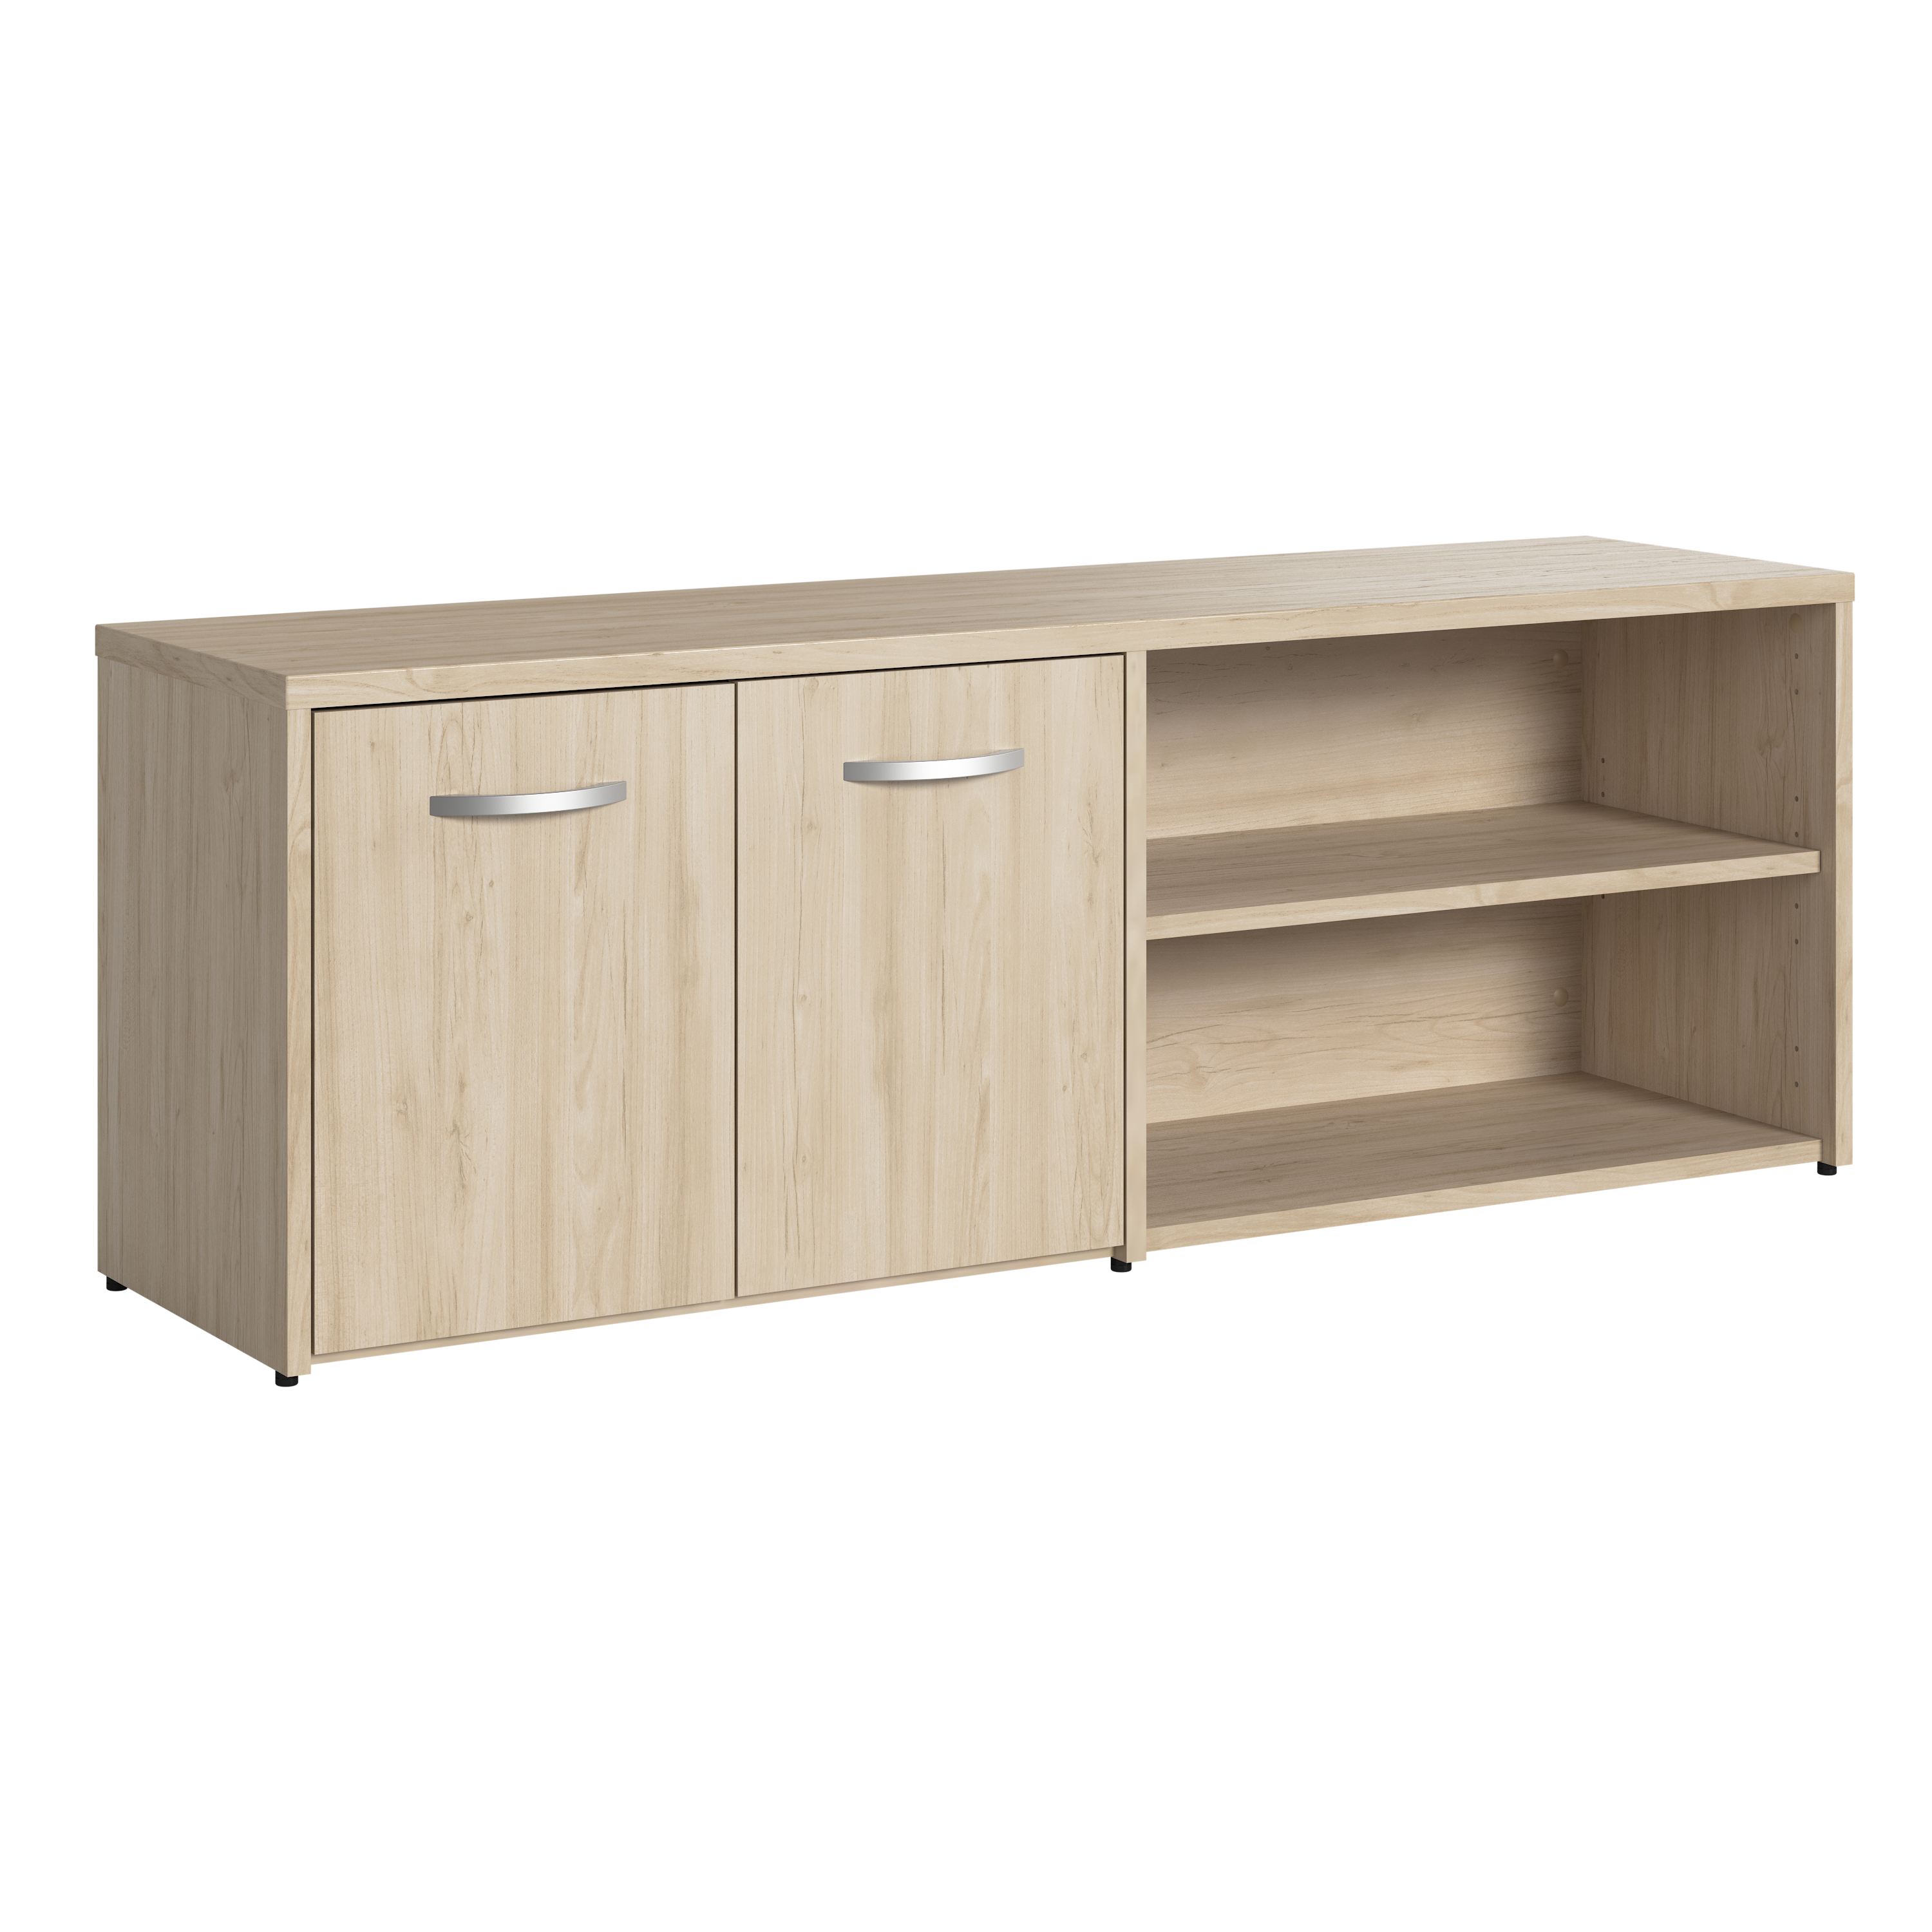 Shop Bush Business Furniture Studio C Low Storage Cabinet with Doors and Shelves 02 SCS160NE #color_natural elm